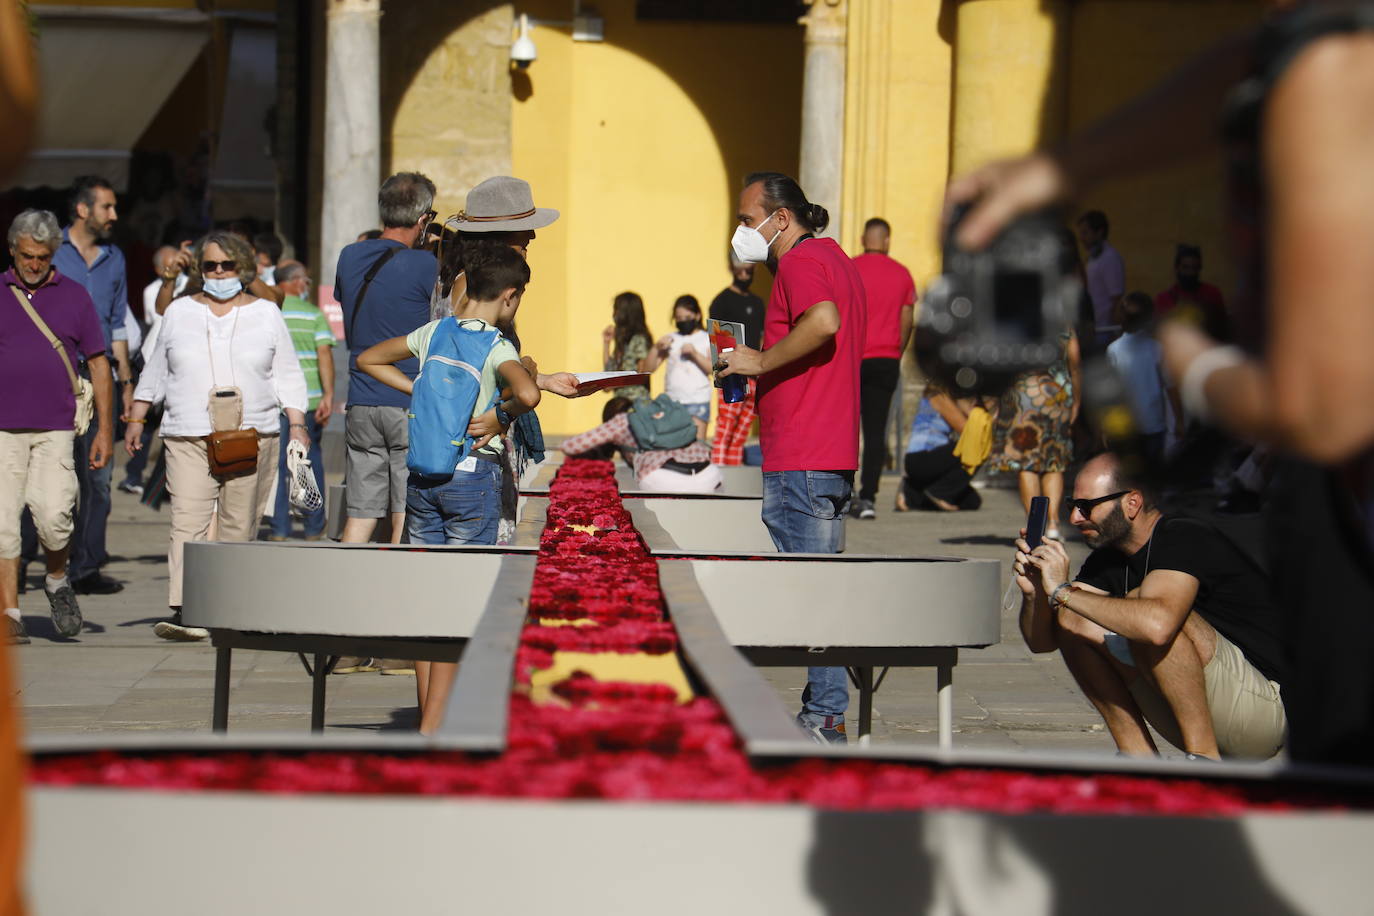 Festival Flora Córdoba | El lleno de la primera jornada en imágenes (II)